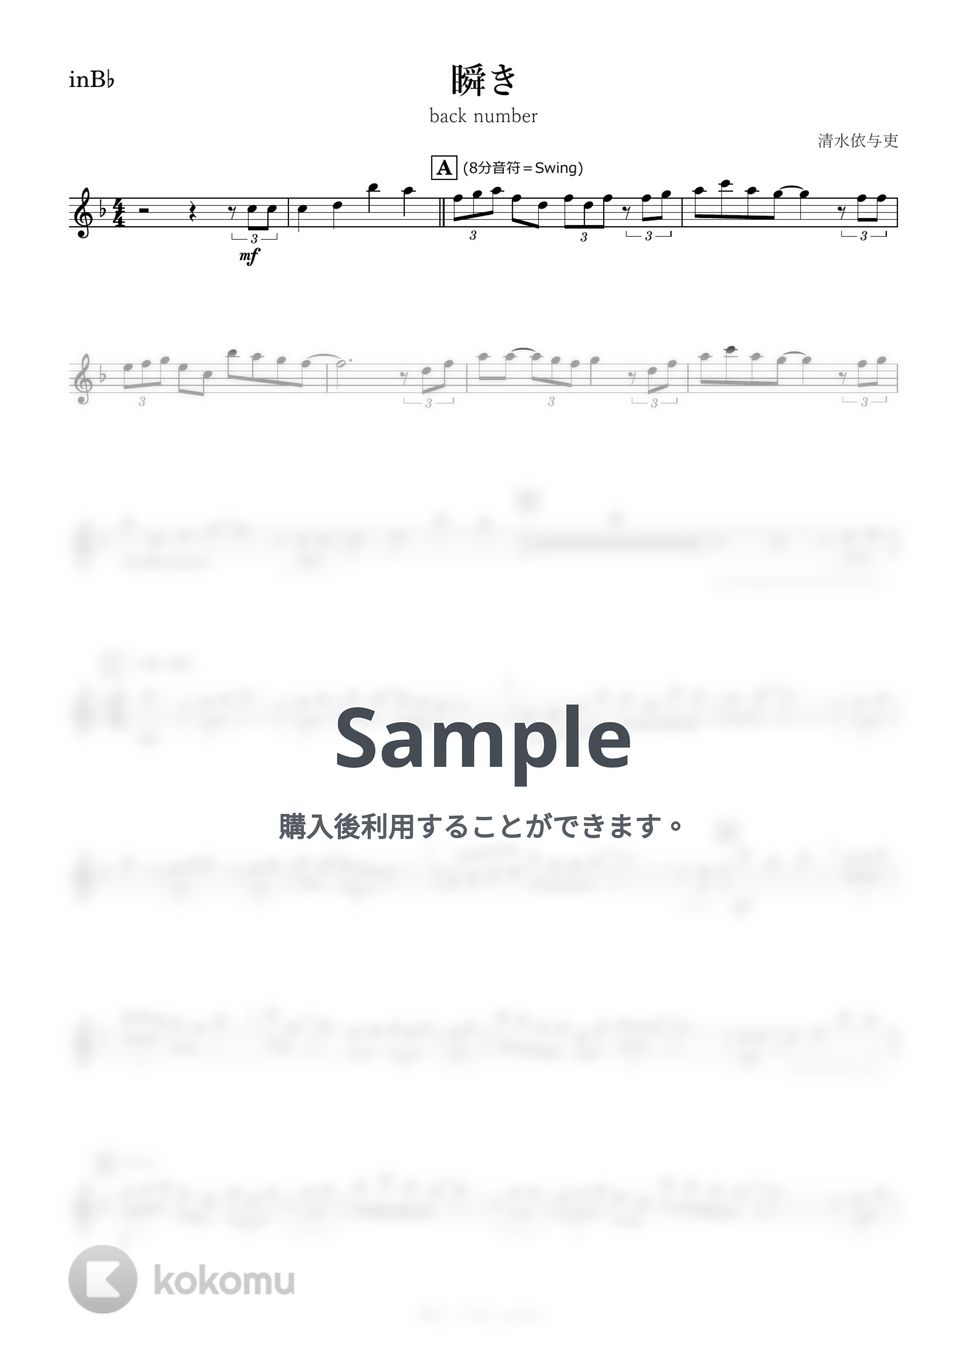 back number - 瞬き (B♭) by kanamusic